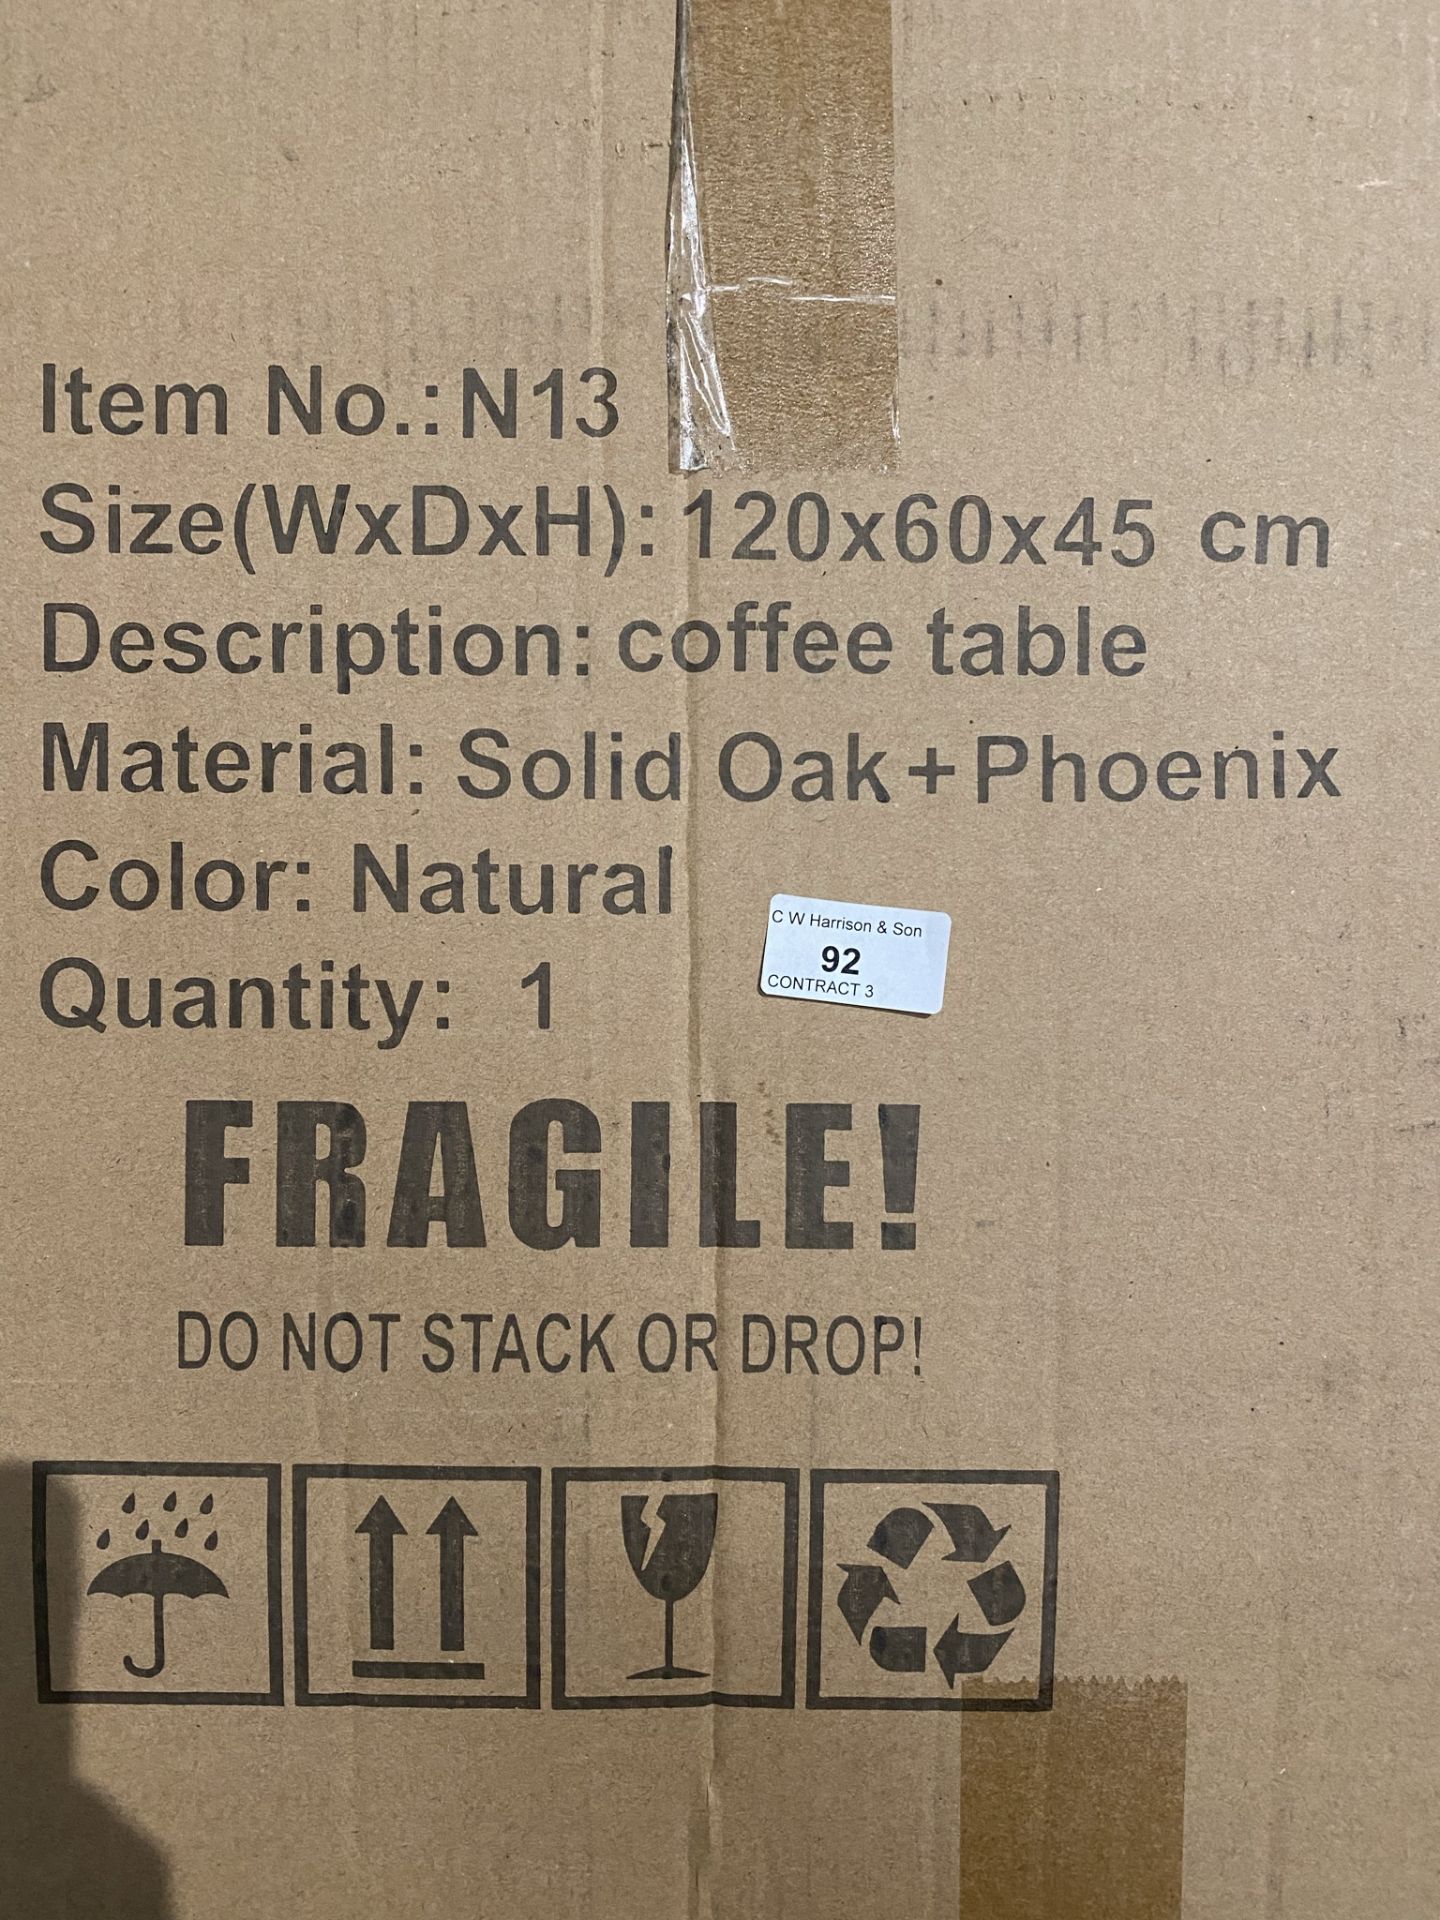 An Solid Oak + Phoenix 4 drawer coffee table - 120cm x 60cm x 45 cm - Image 9 of 10